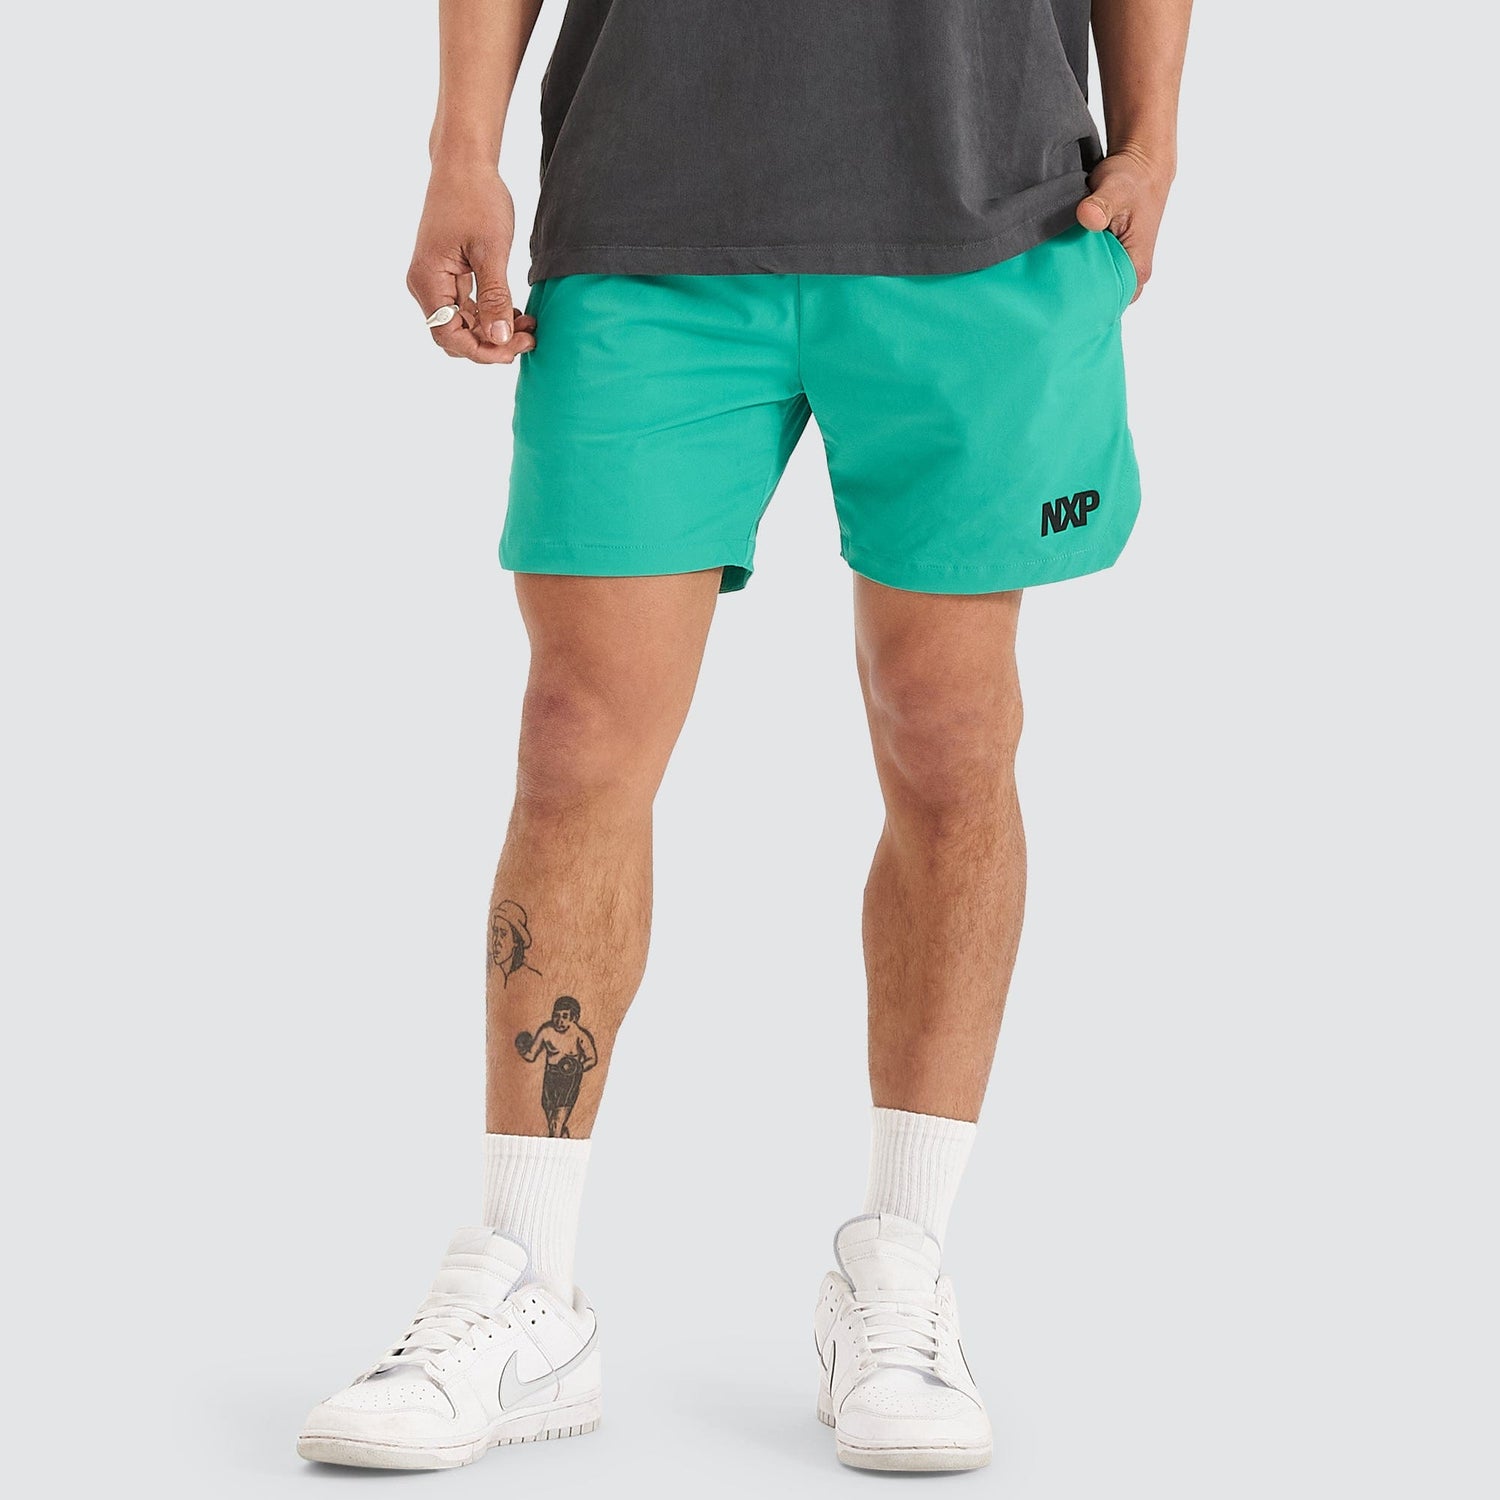 Trigger Elastic Waist Shorts Mint Green